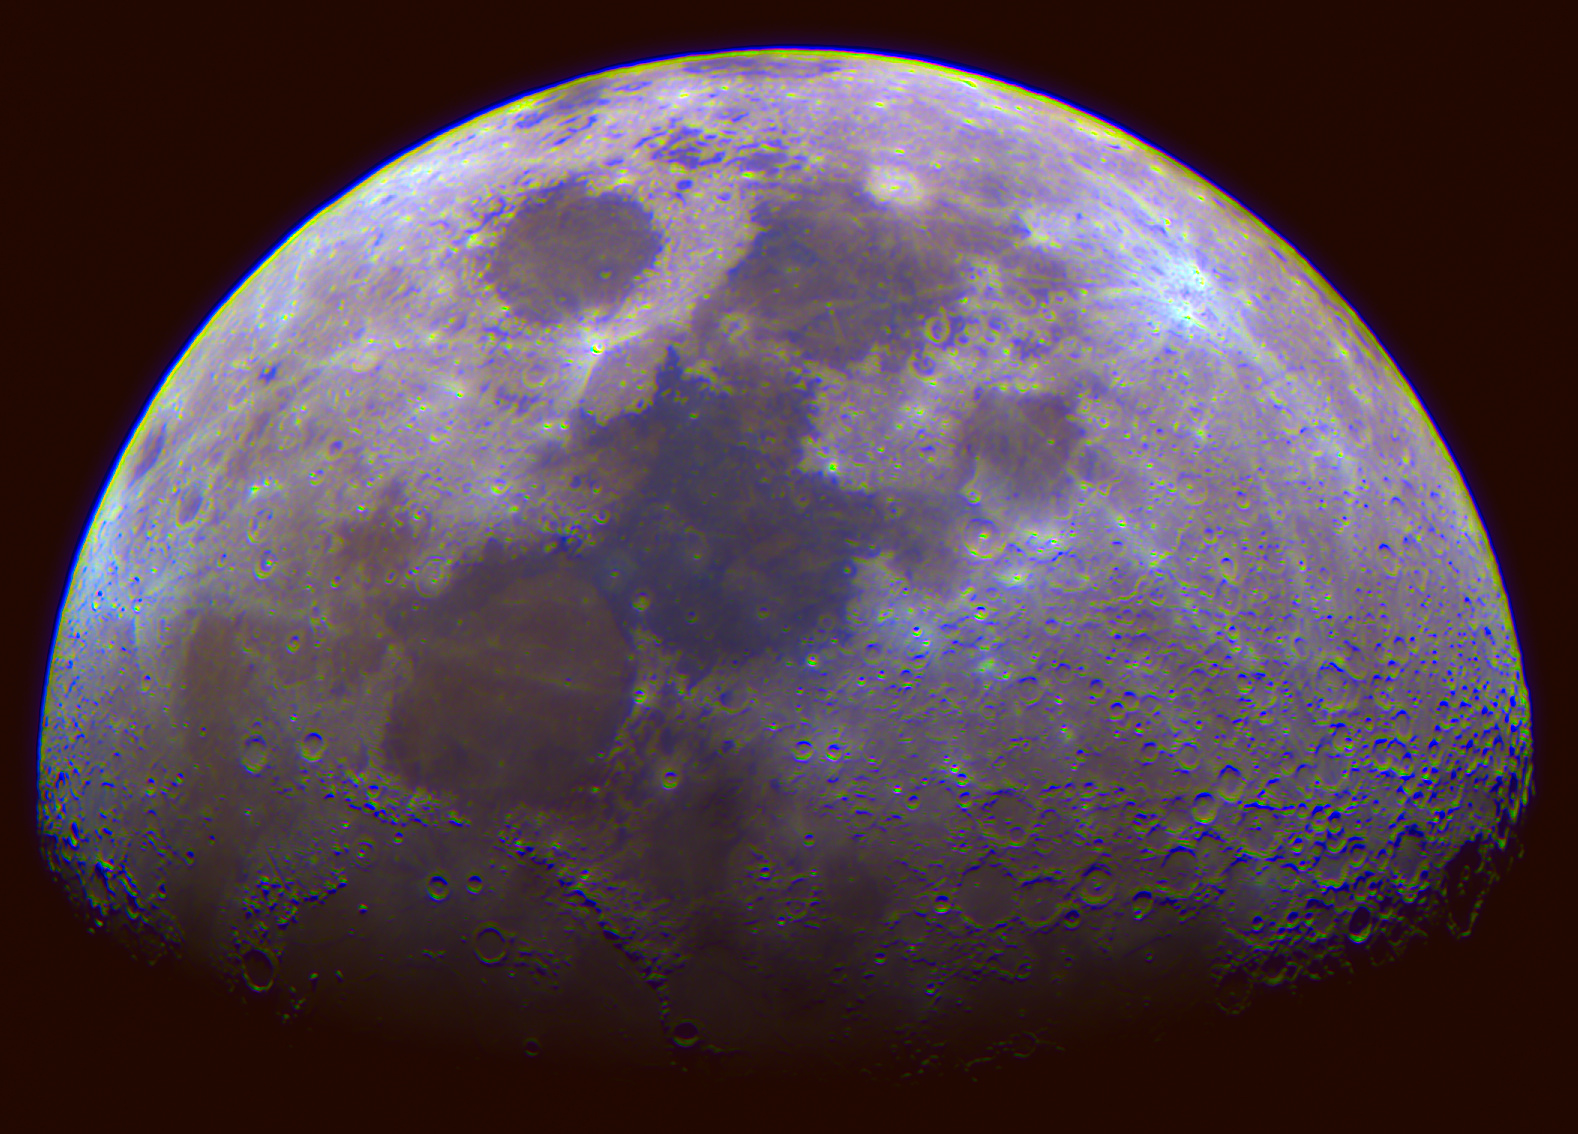 Moon_2021-12-12_ASI120MC_Clear_Affinity_Crop_Landscape_Saturate_Unsharp-Mask-1.5-3.035-0_Exposure-1-stop.jpg